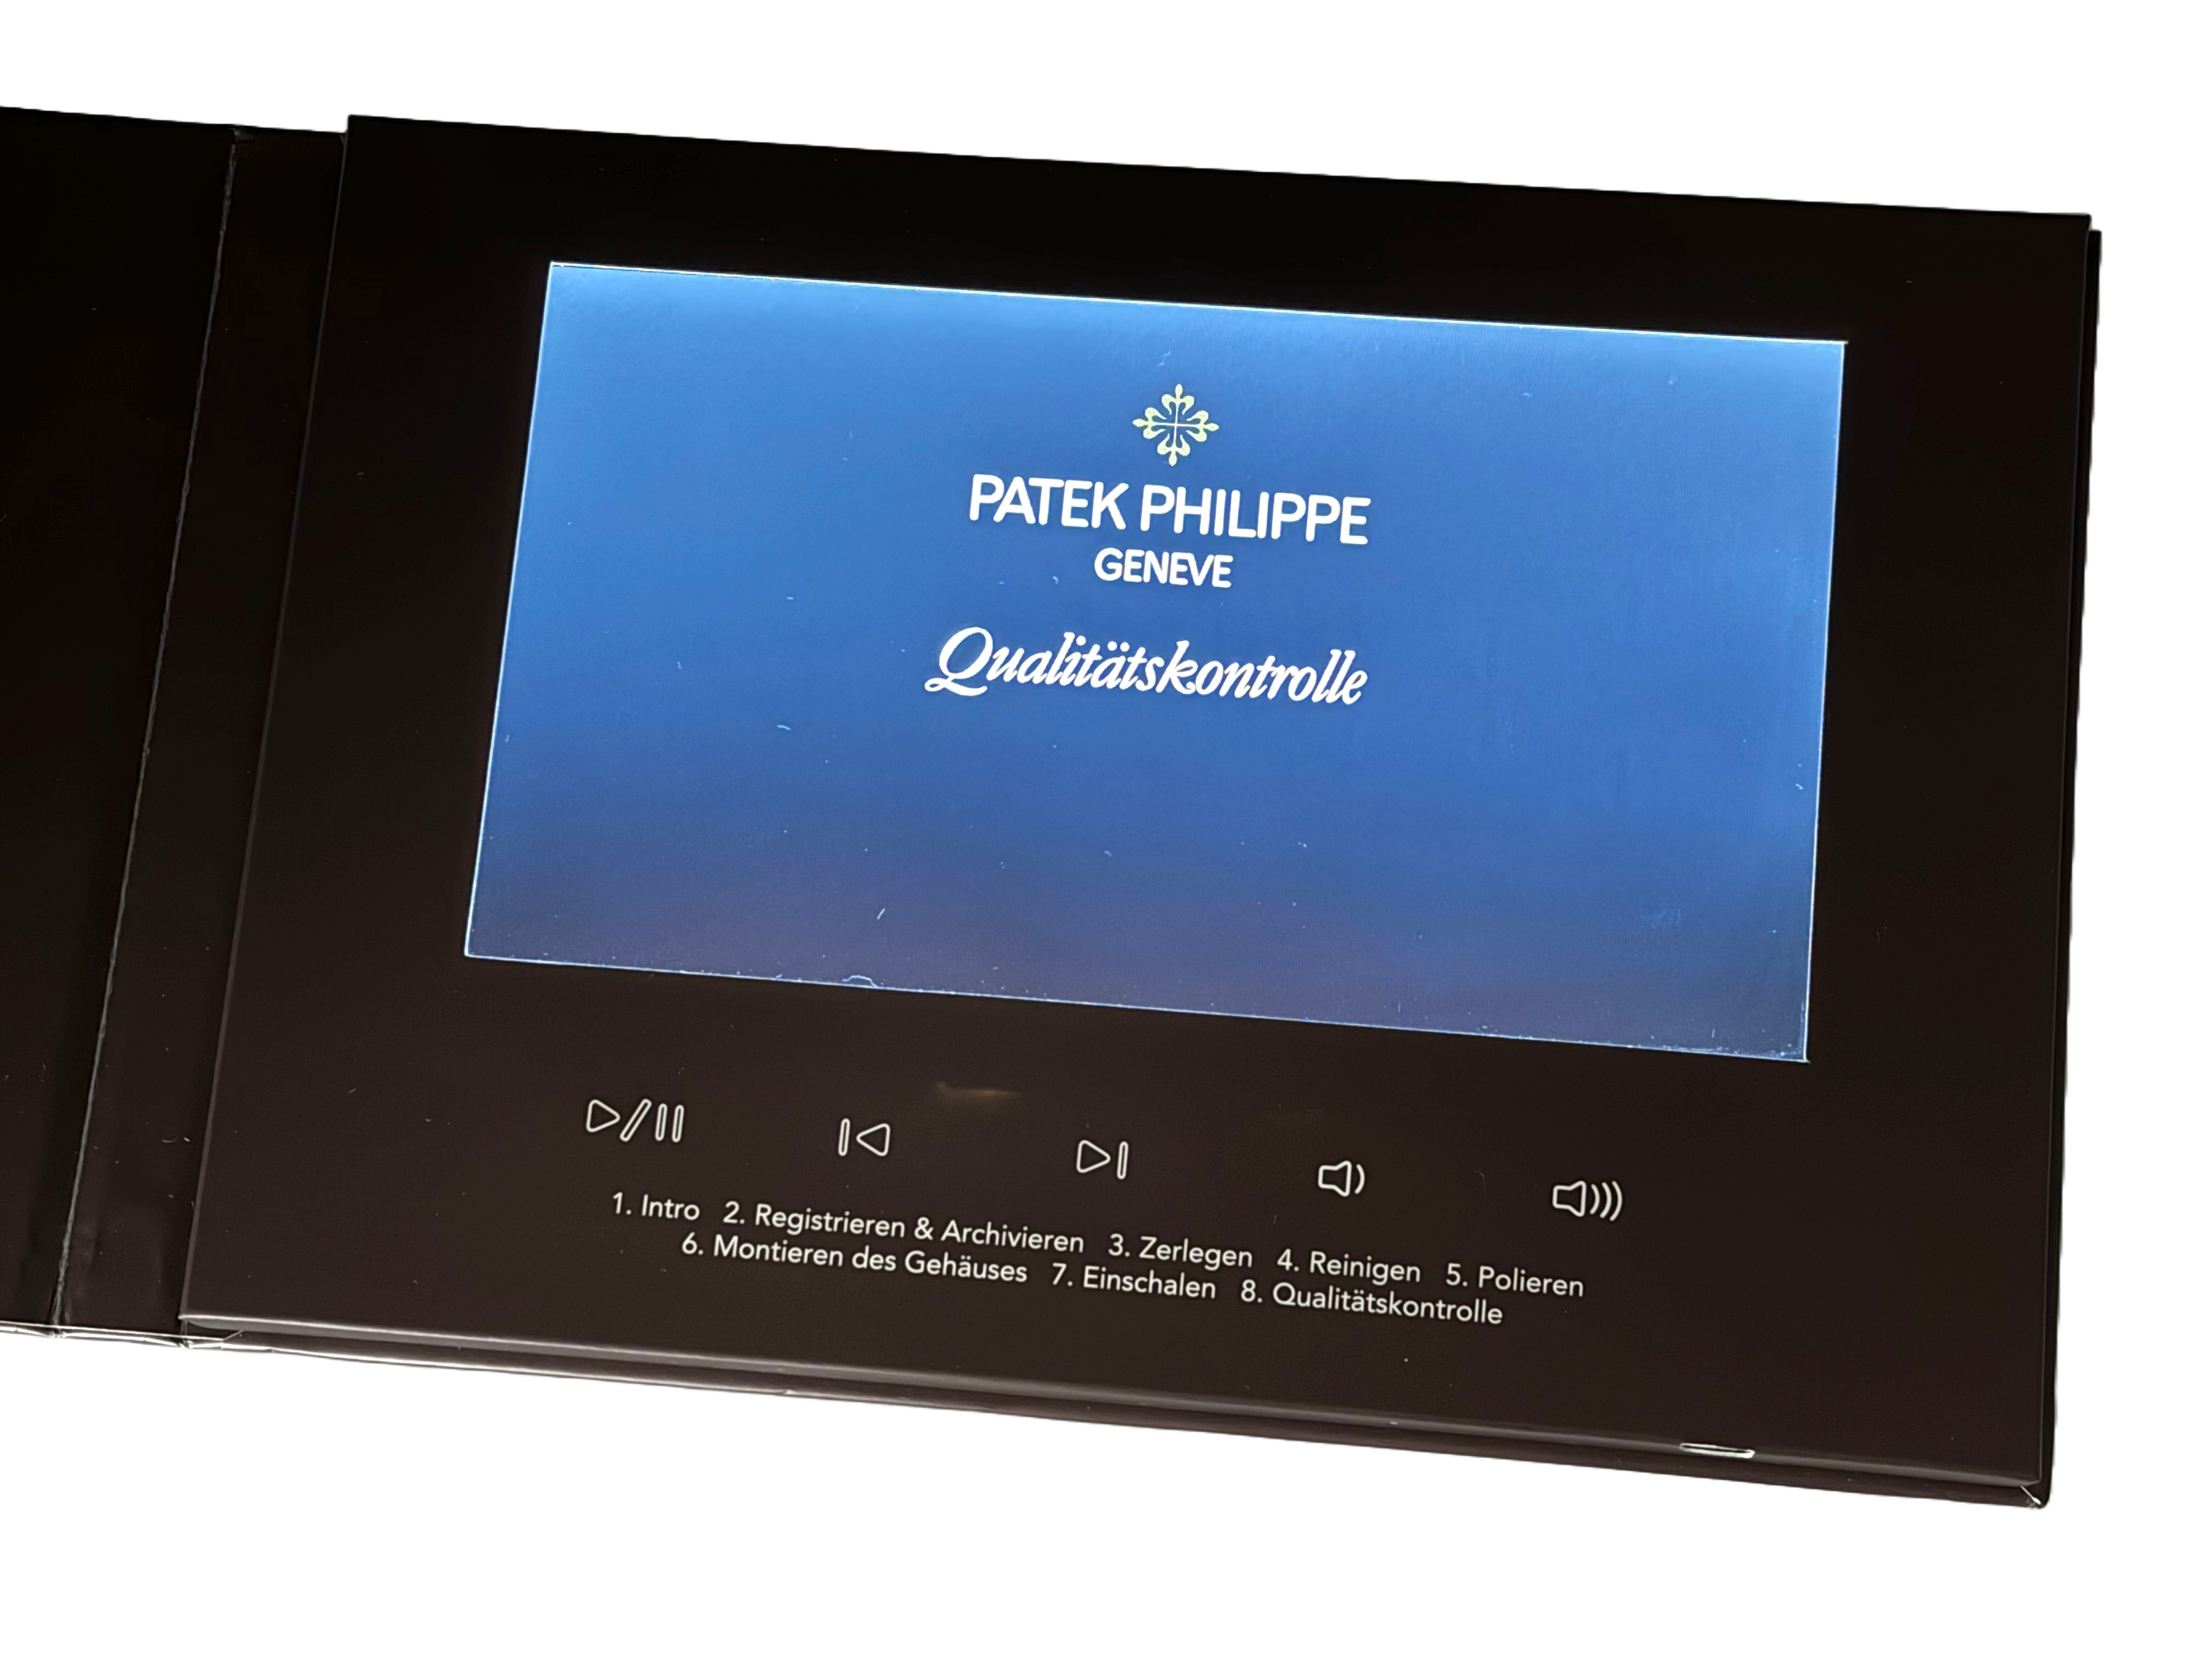 Patek Philippe The Service Promise Tablet 